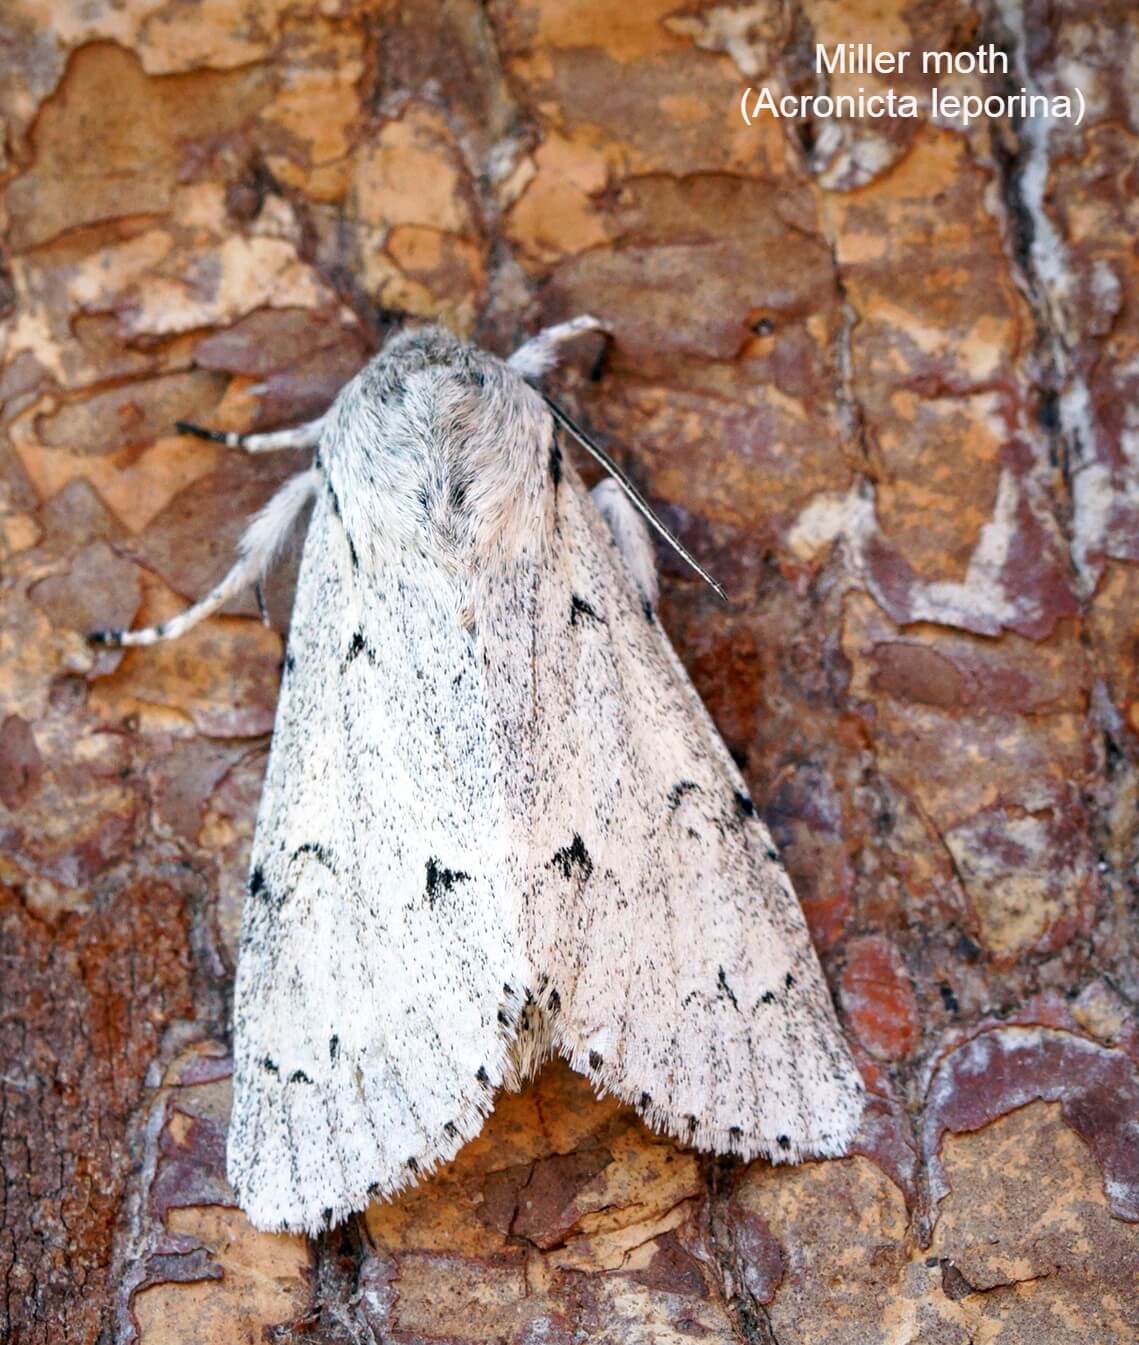 Miller moth (Acronicta leporina)